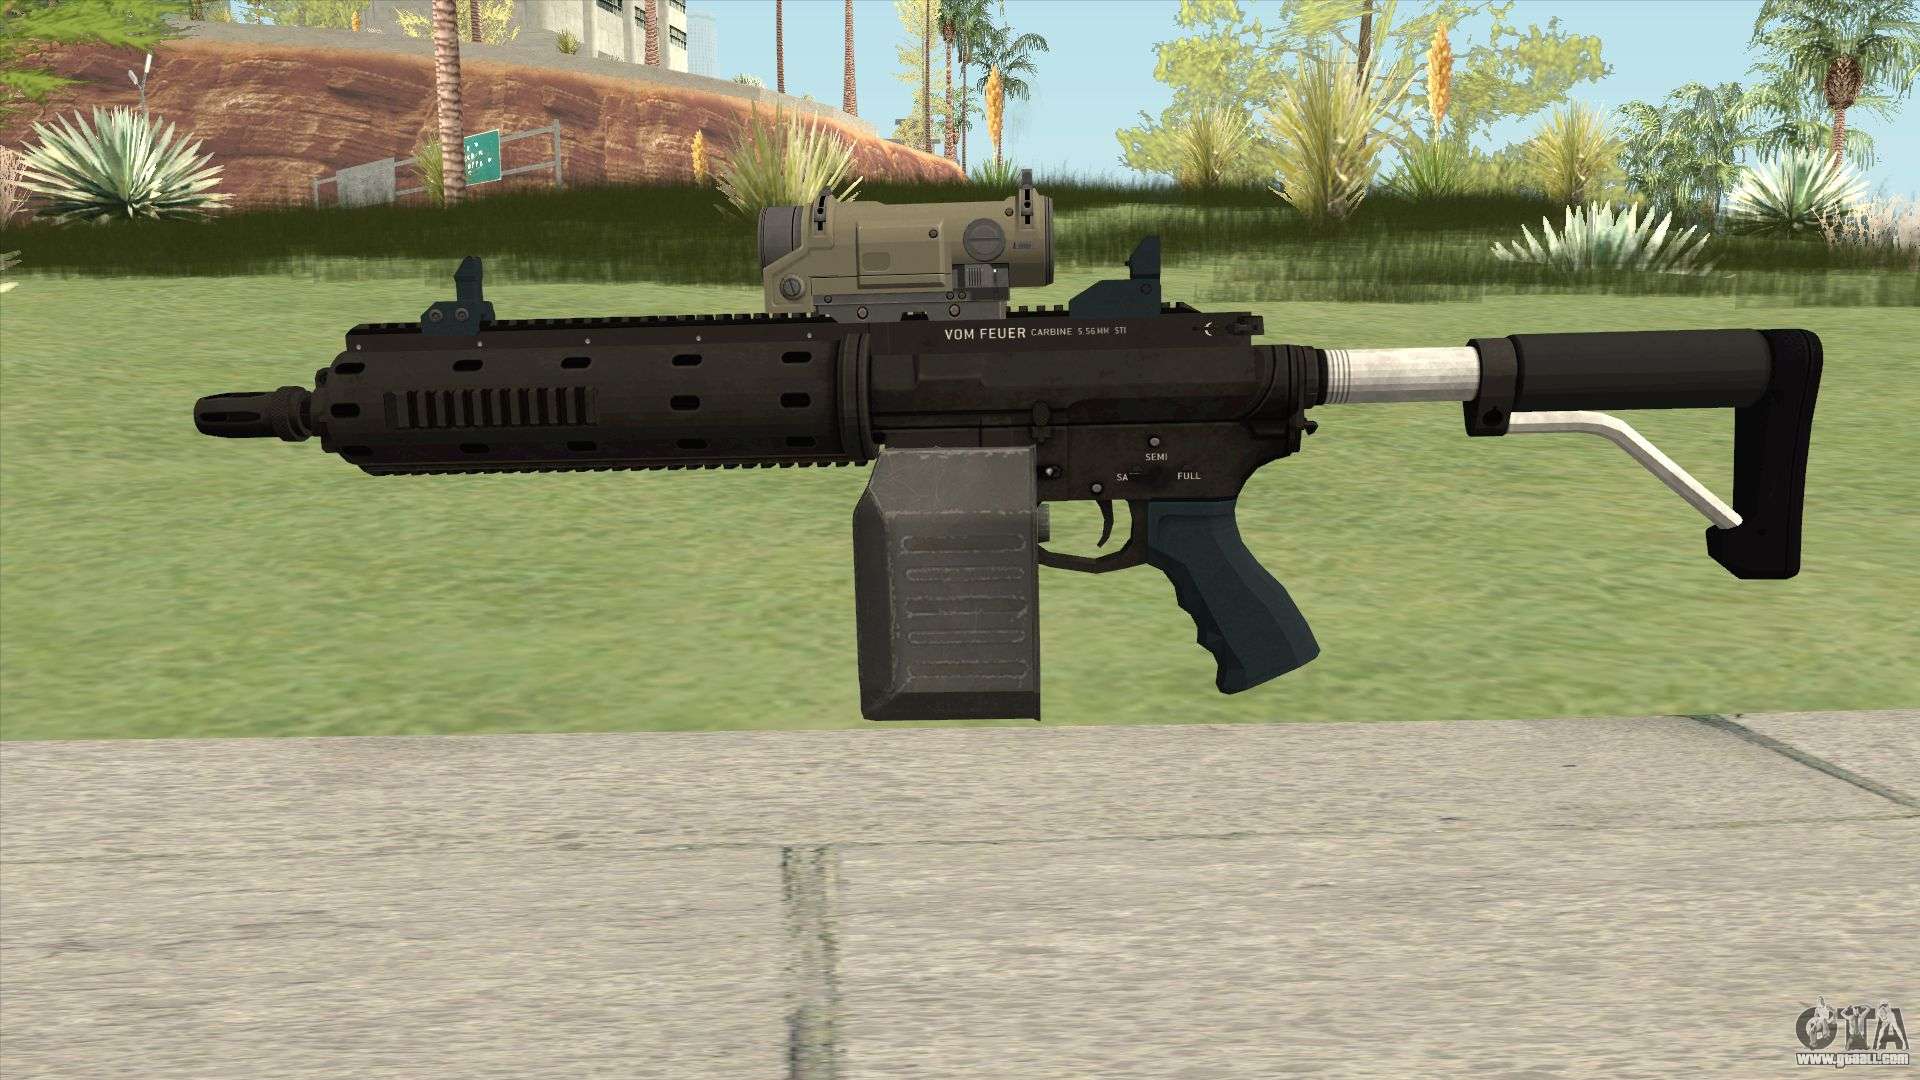 Carbine Rifle GTA V V1 (Flashlight, Tactical) for GTA San Andreas